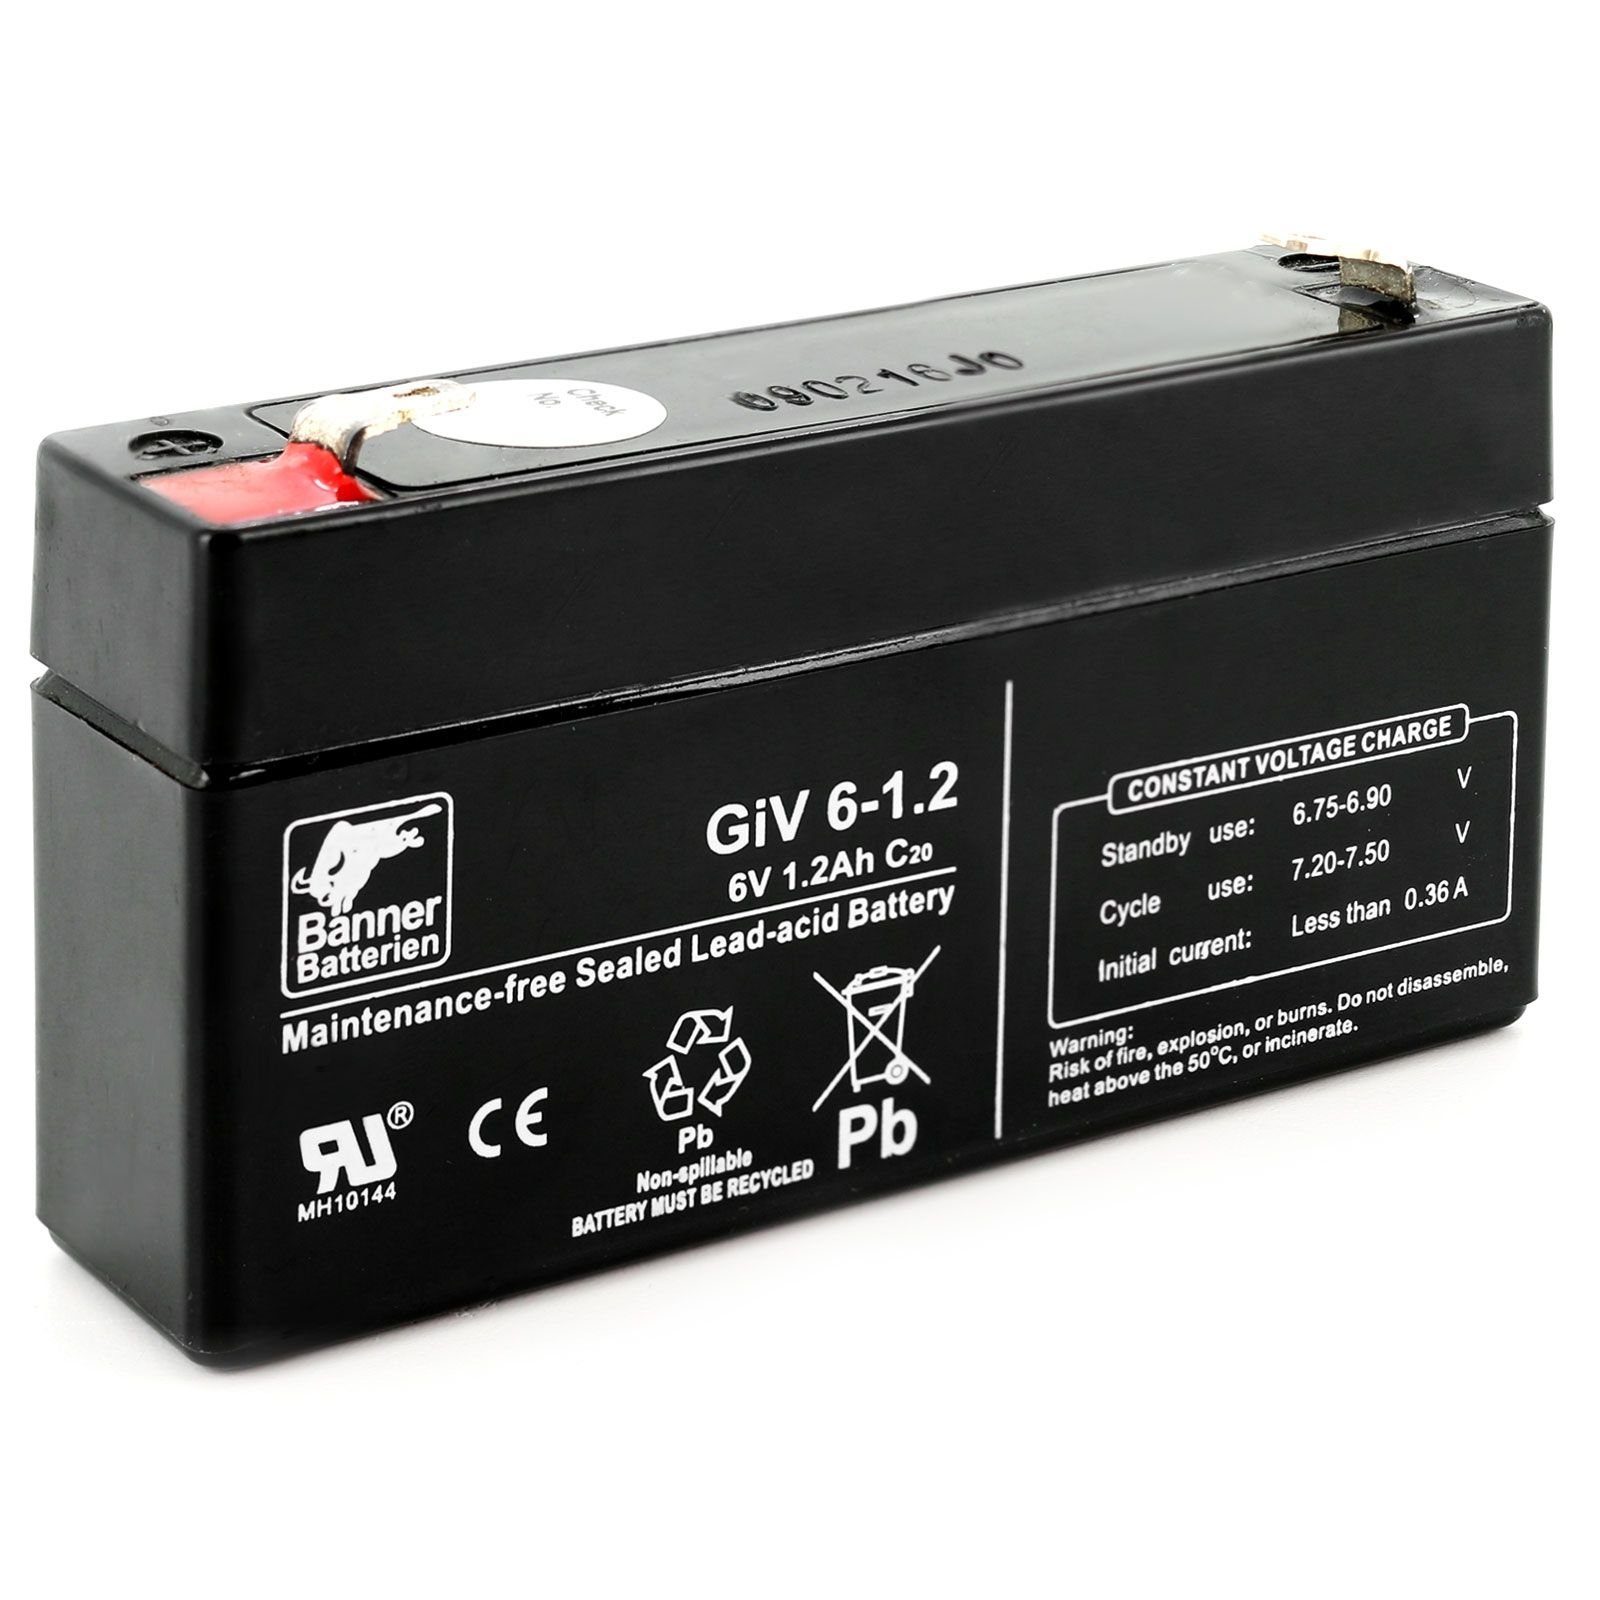 Banner Batterien Batterie Stand by Bull 6 Volt 1,2Ah GiV 06-1.2 Batterie, 6 Volt 1,2Ah GiV 06-1.2